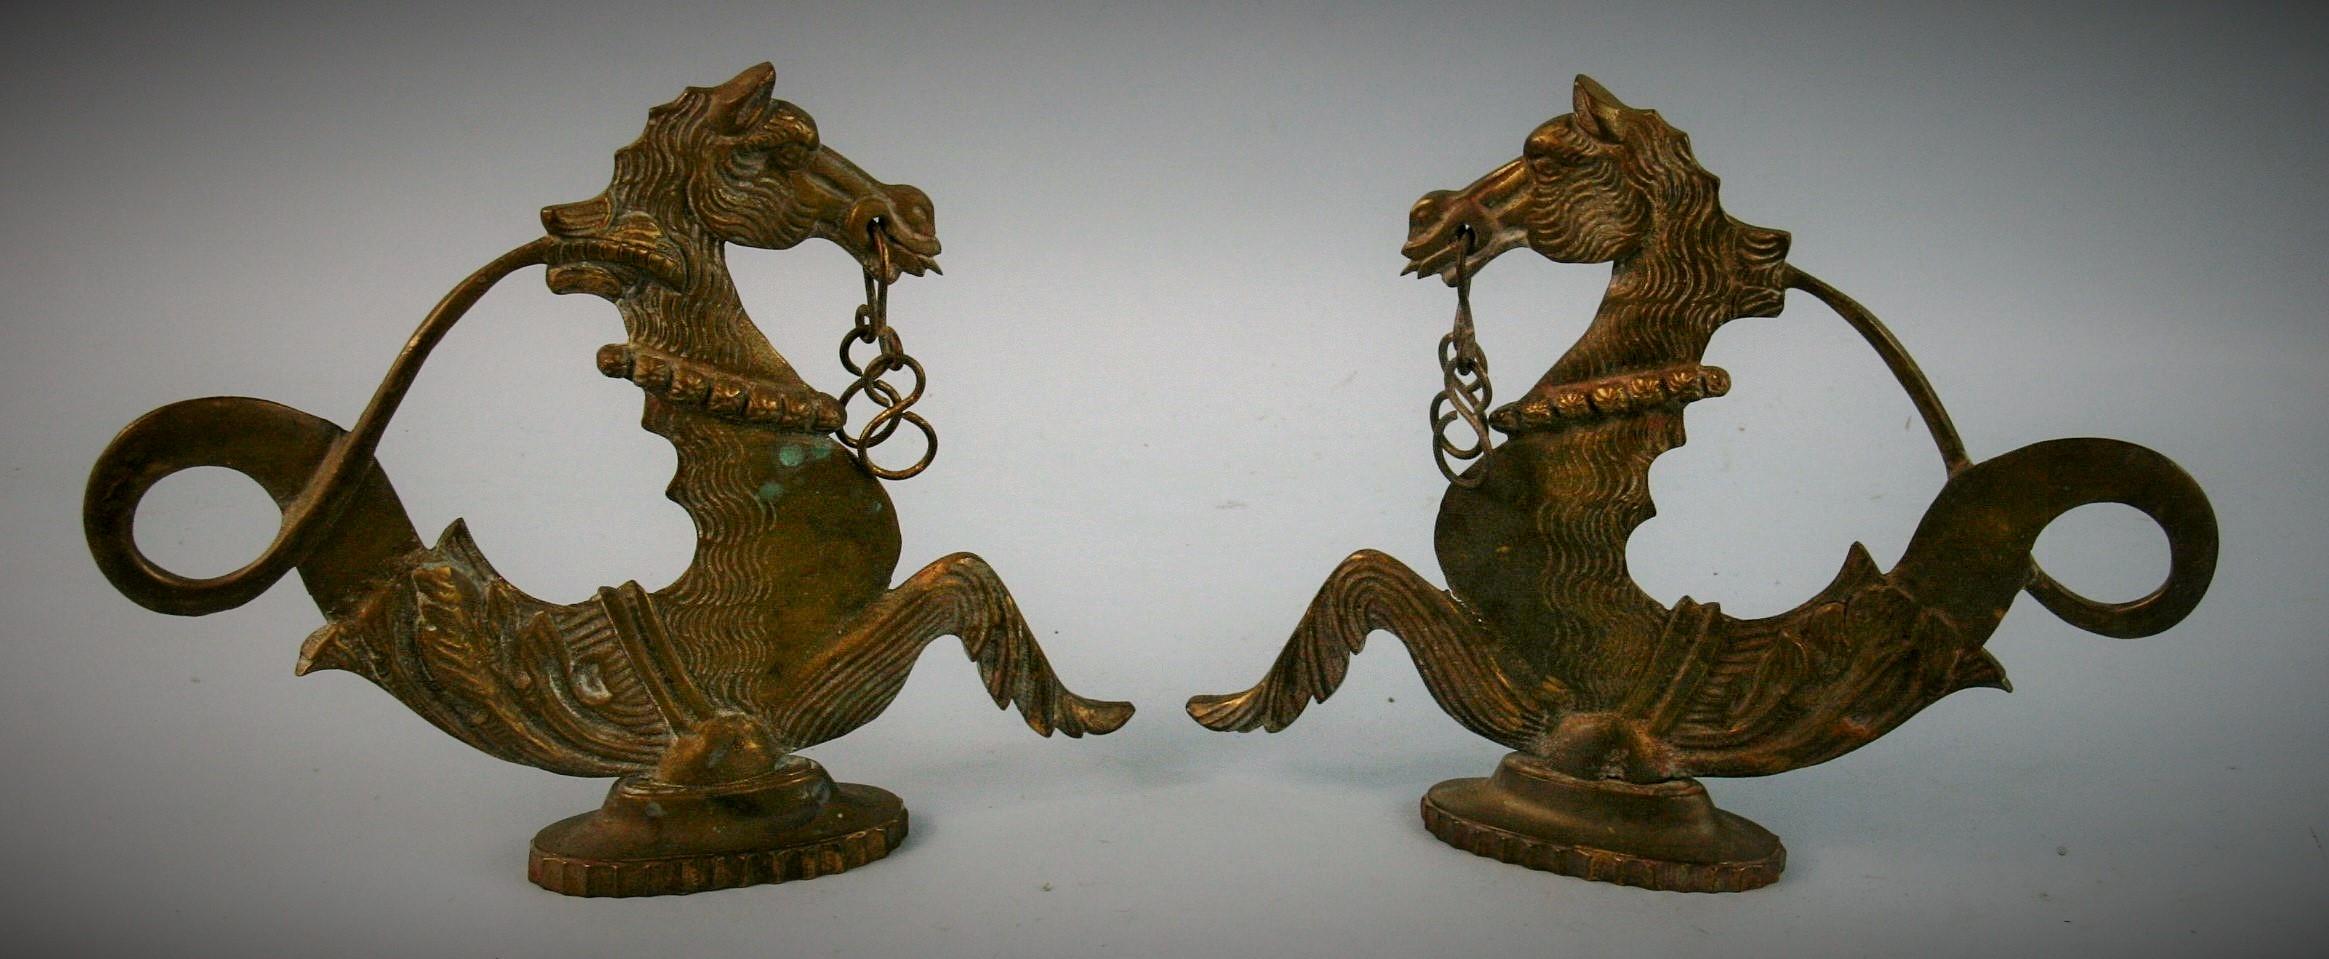 3-723 cast bronze Japanese dragons.